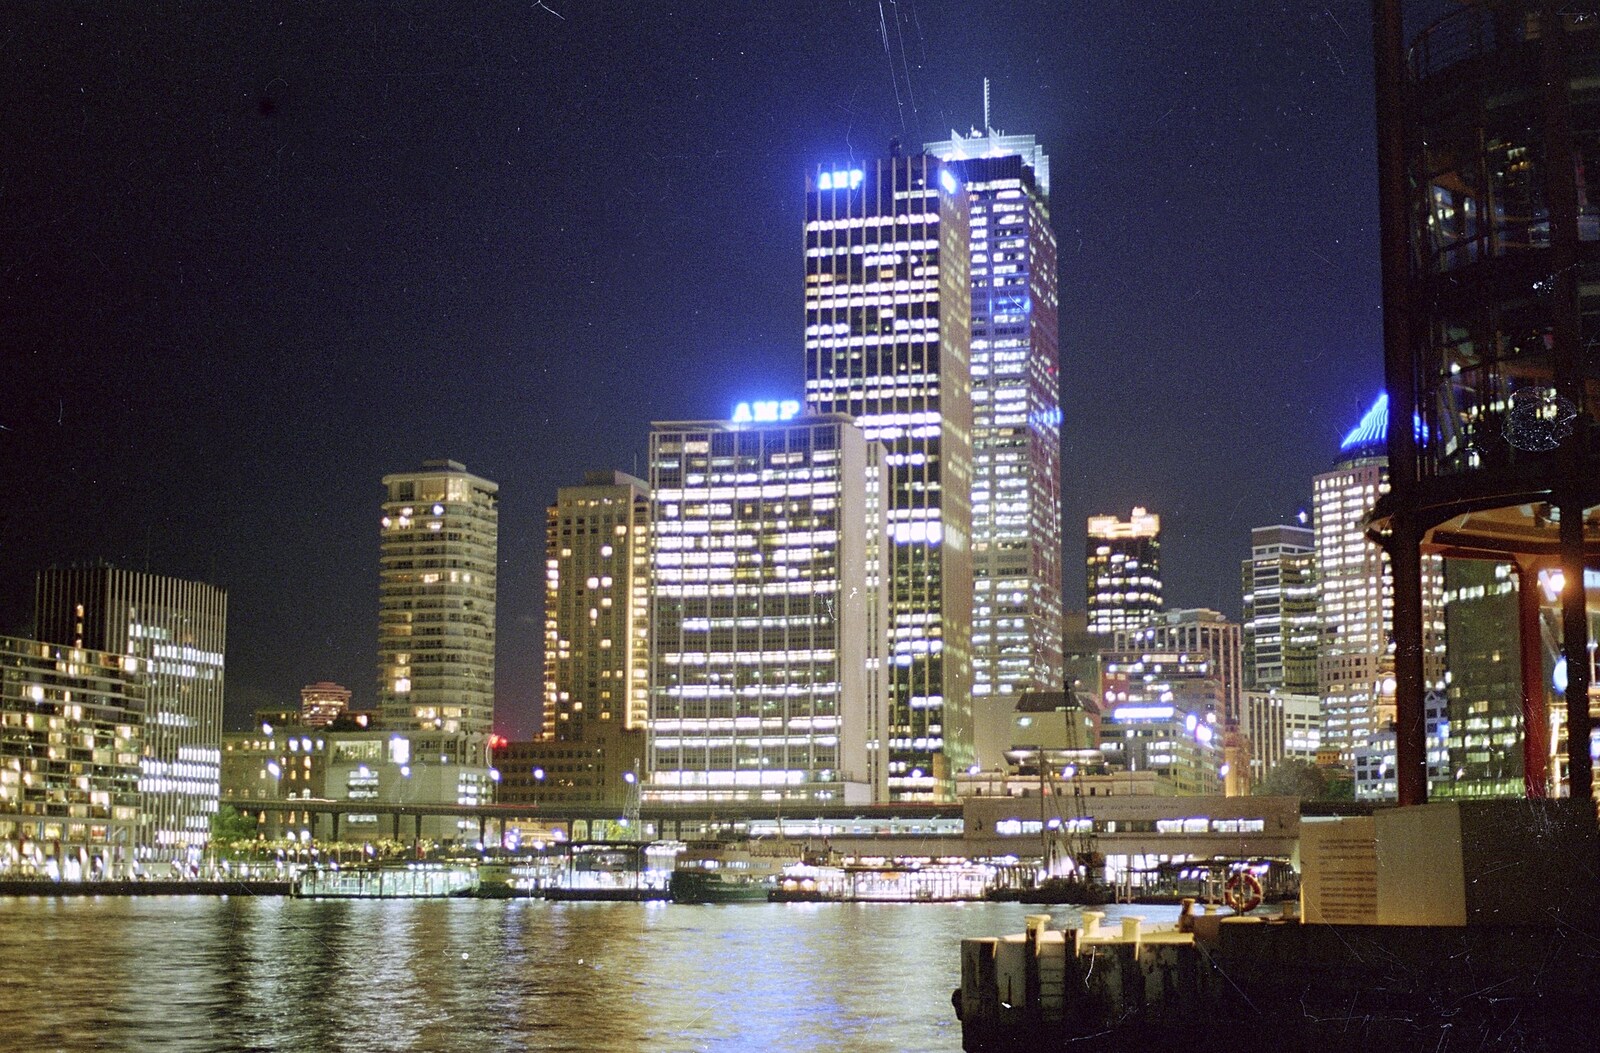 Circular Quay at night from Sydney Triathlon, Sydney, Australia - 16th April 2000